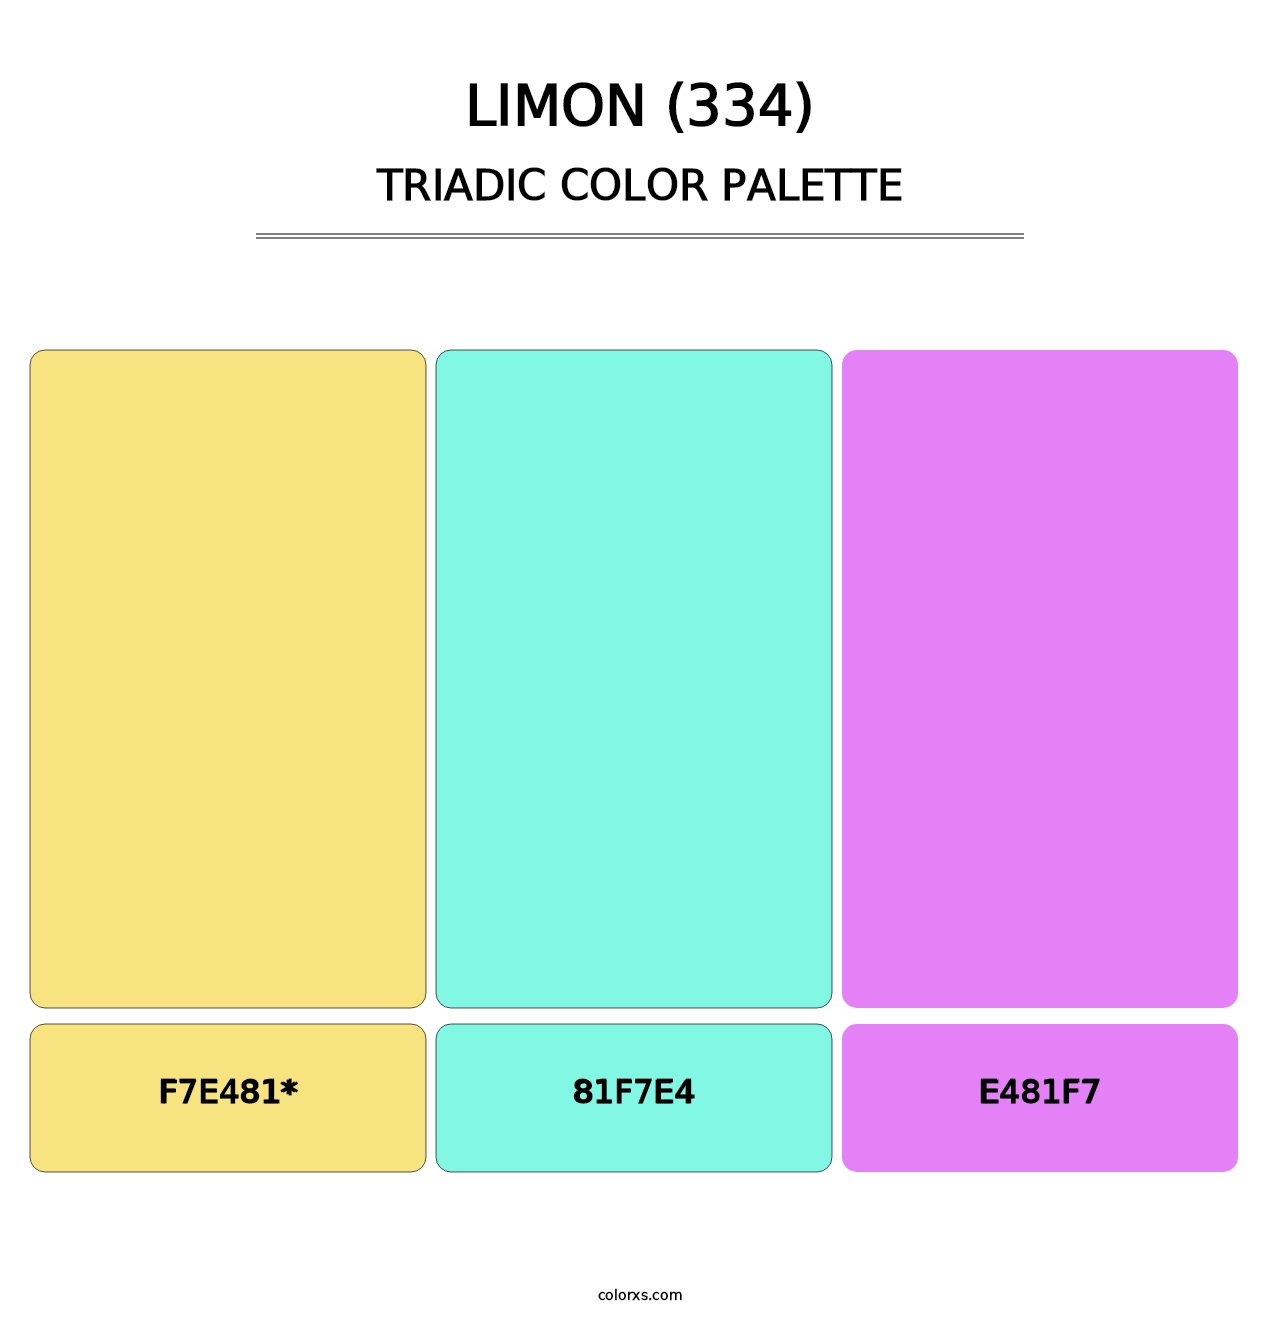 Limon (334) - Triadic Color Palette